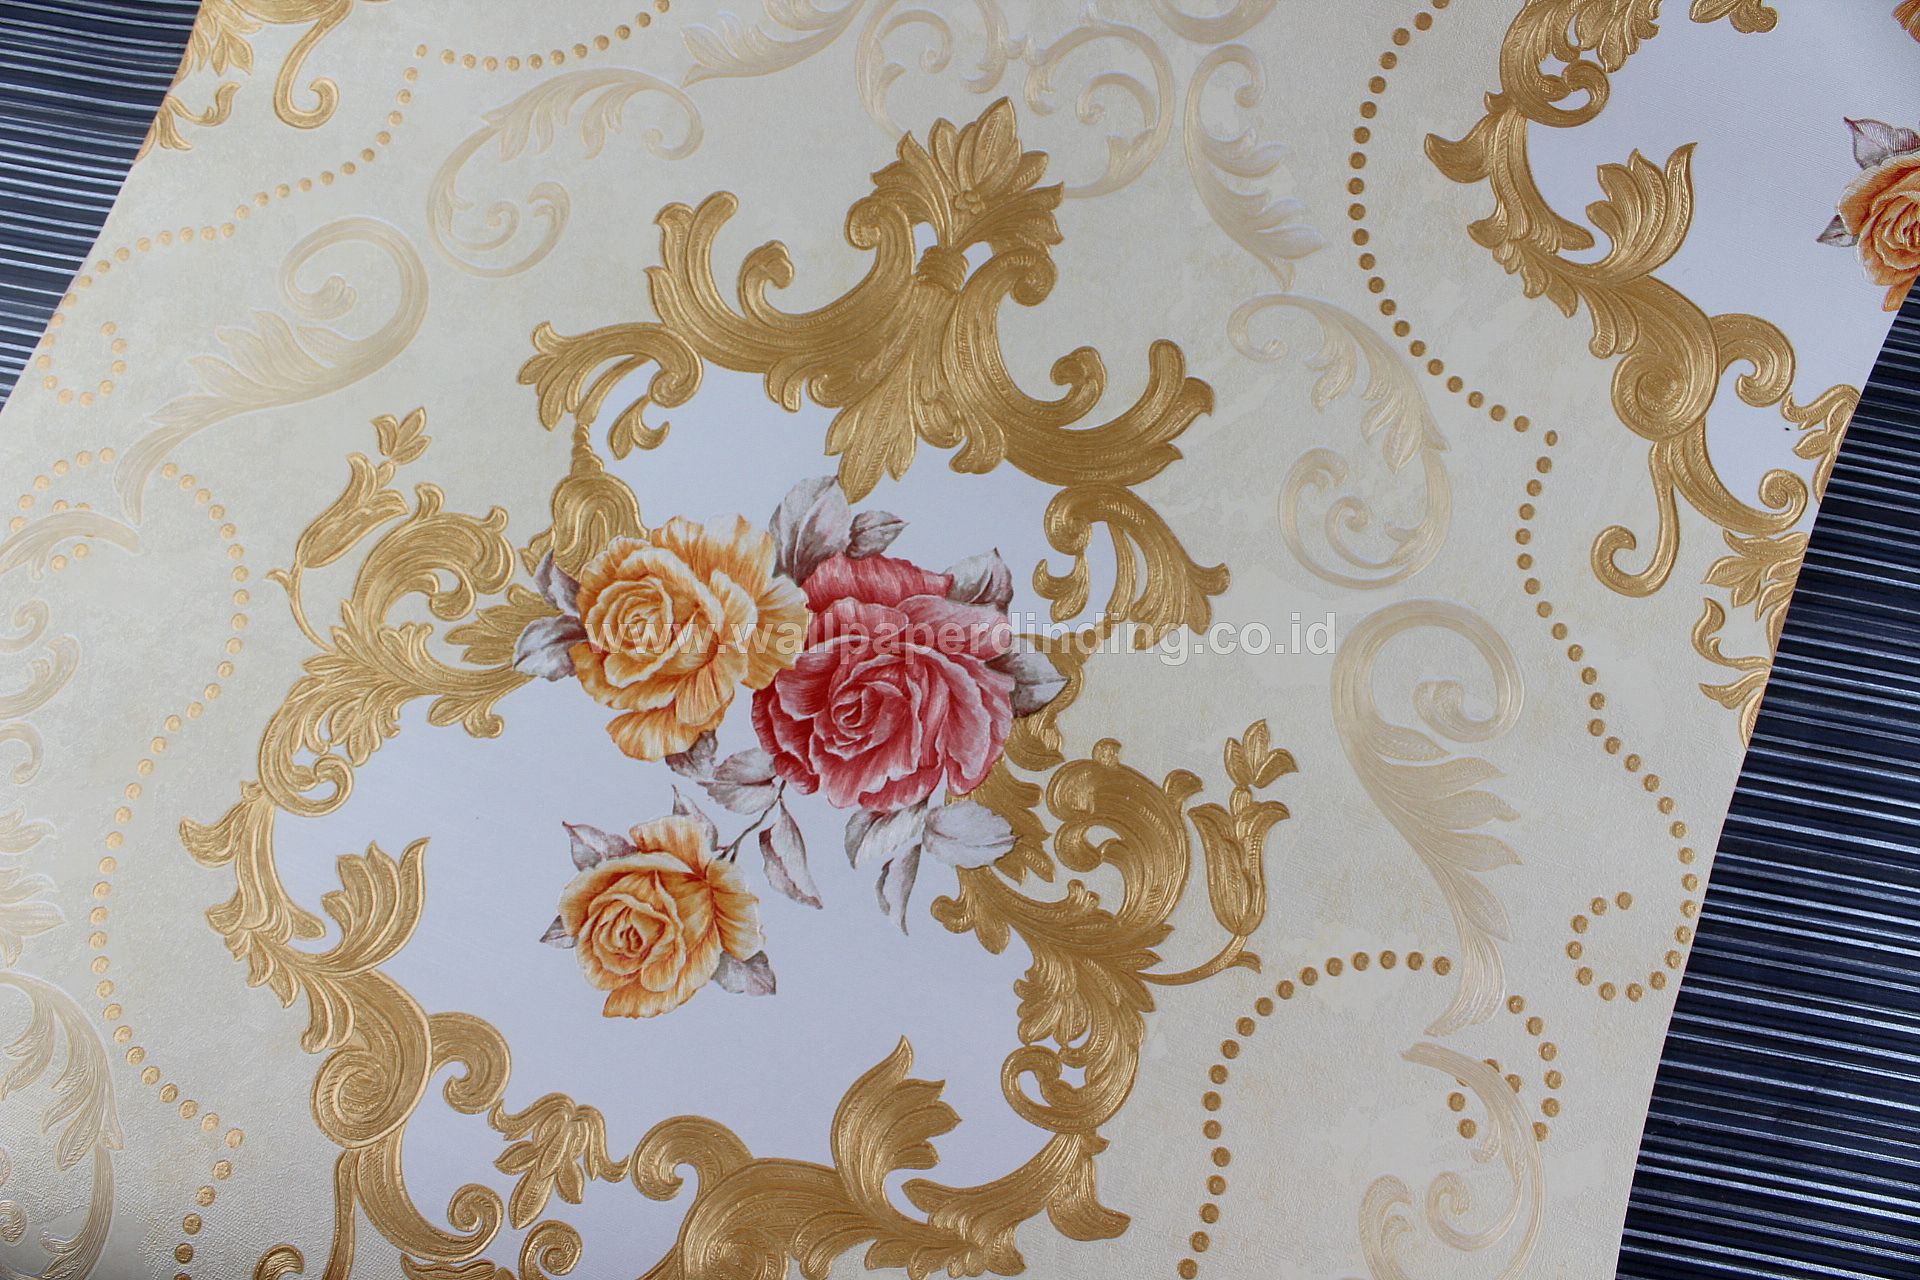 Wallpaper Dinding Batik Bunga Gold Cream Lux319-2 - Stitch - HD Wallpaper 